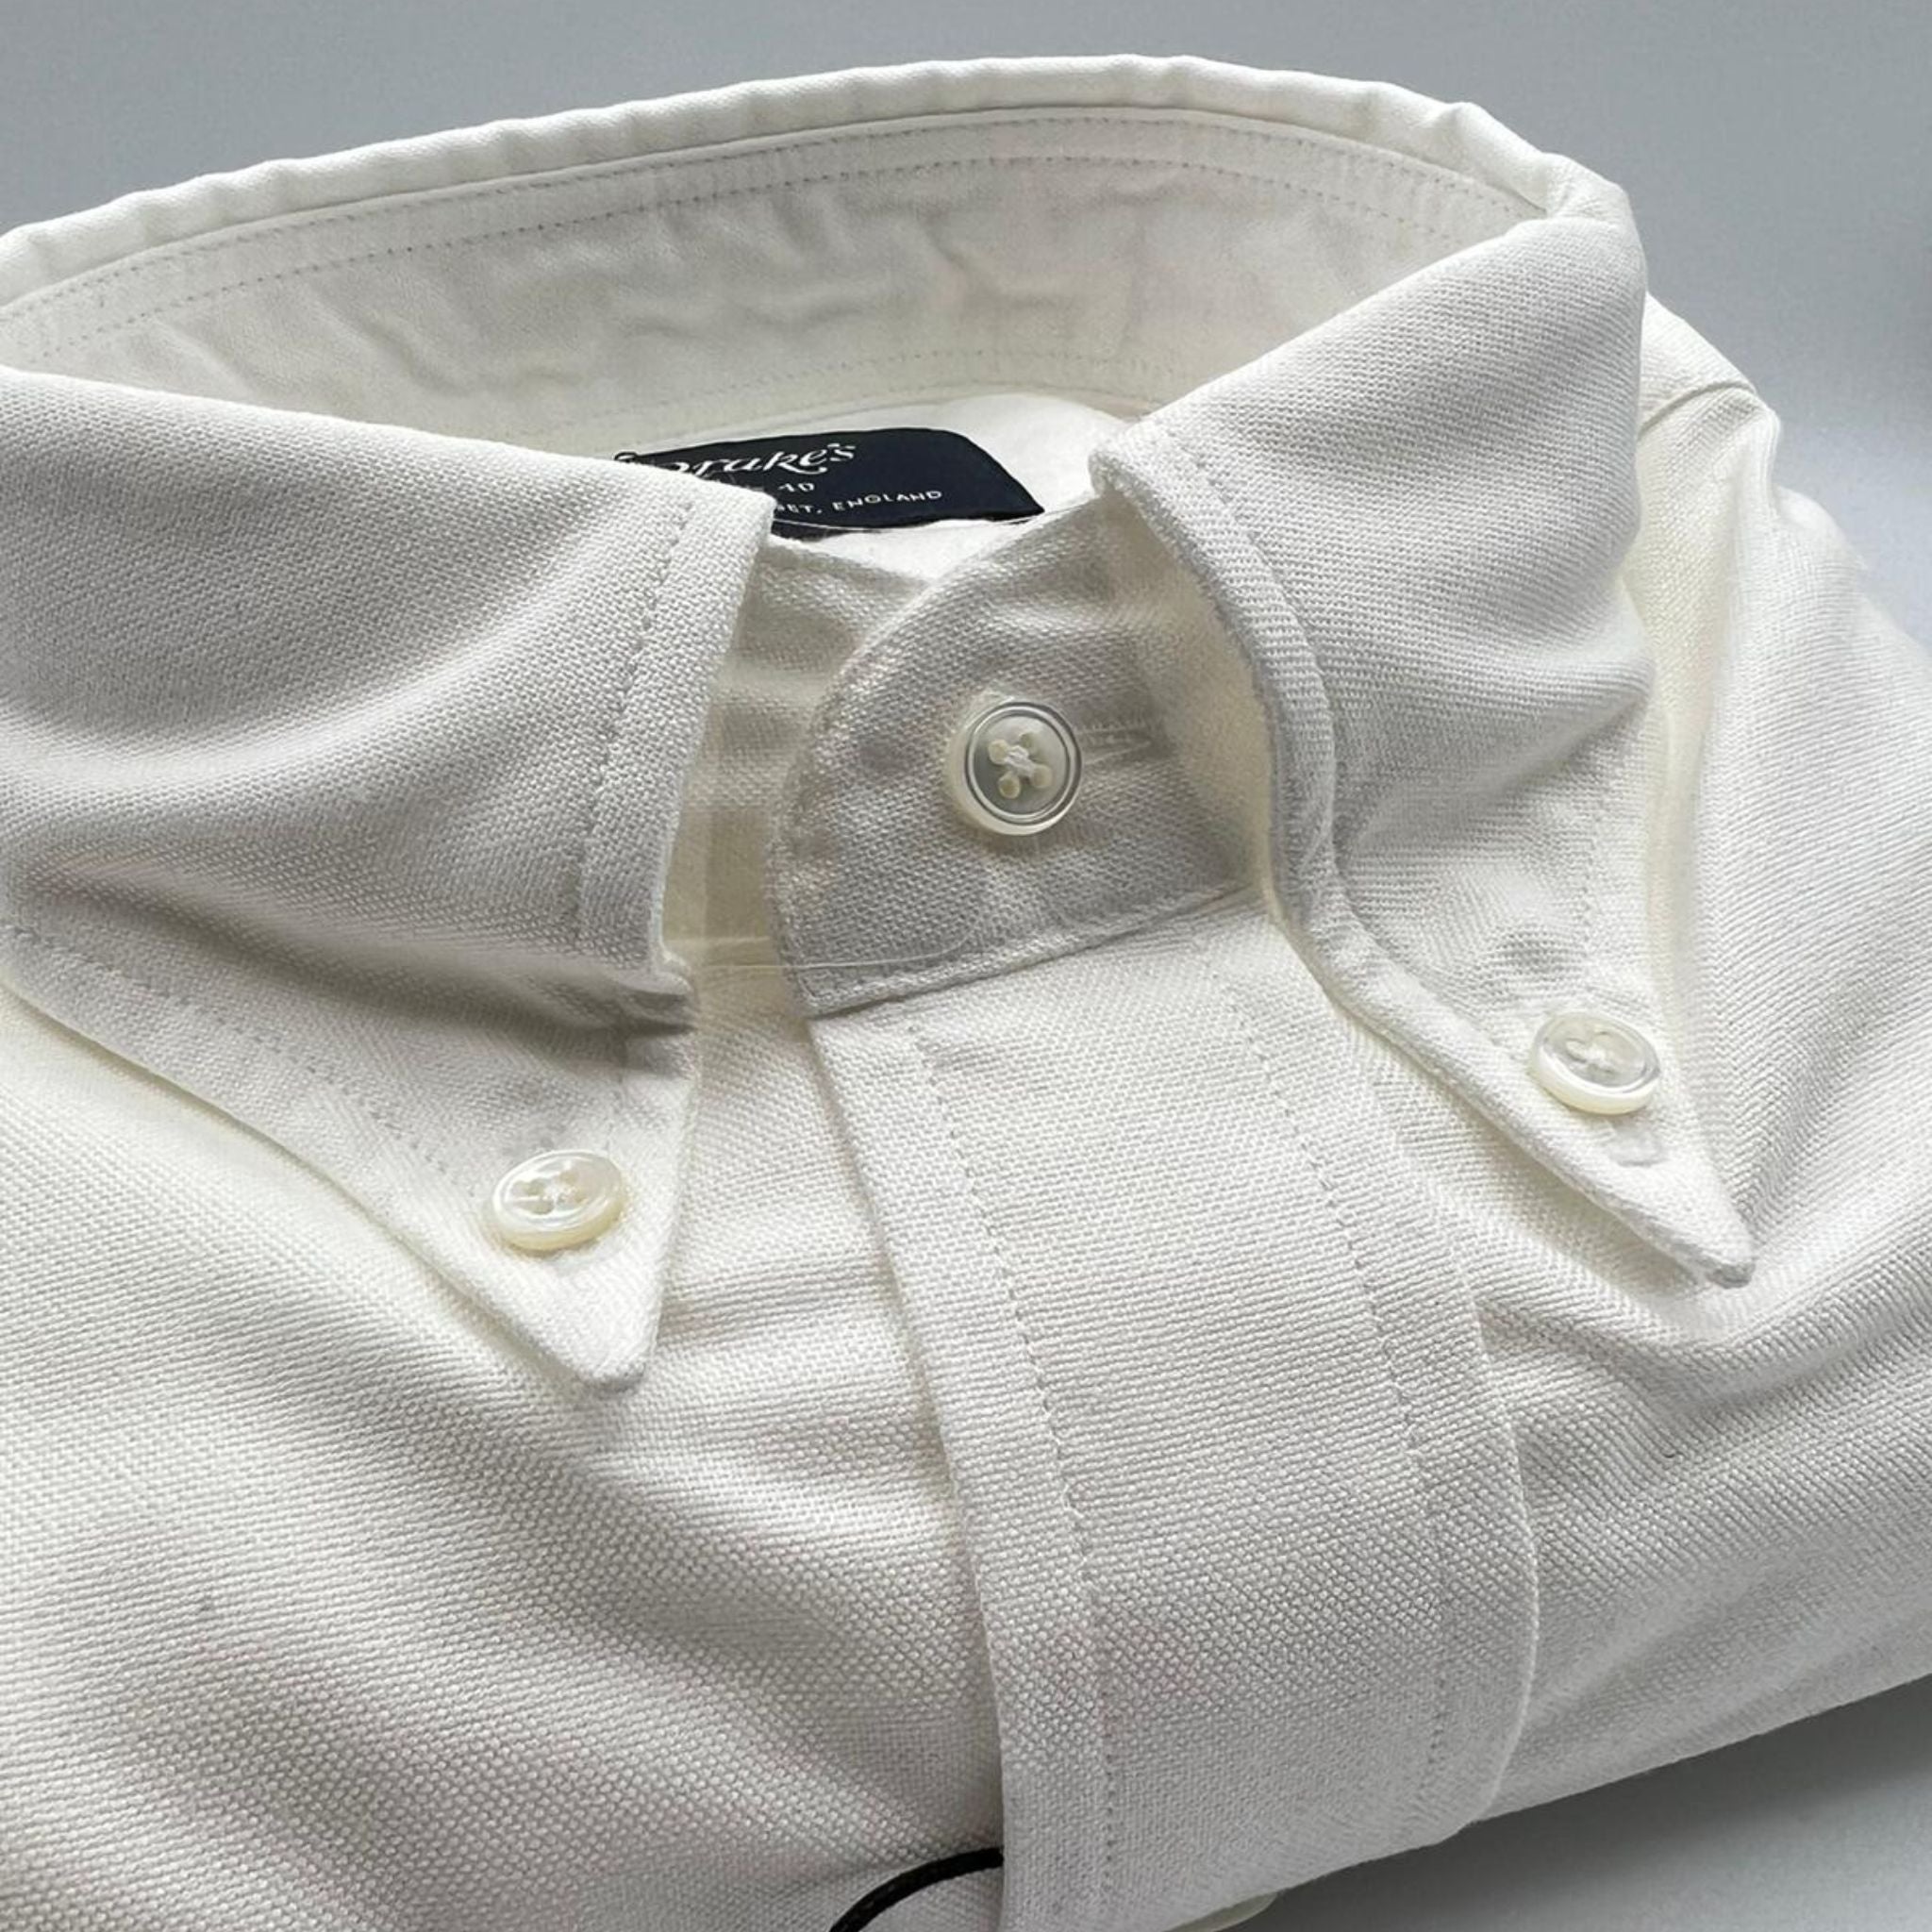 Drake Clothing Company Mens XL White Button Down Fishing Shirt RN 146591 EUC